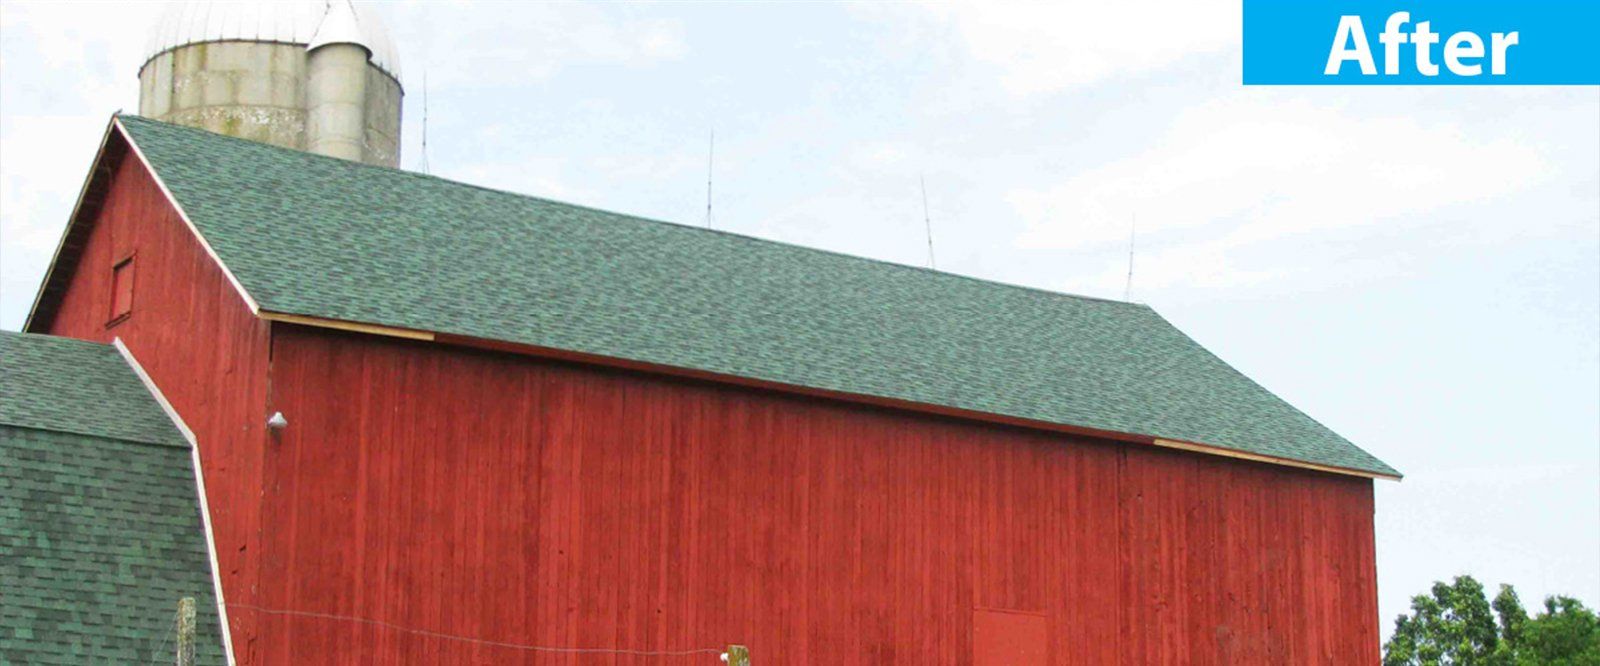 After Barn Re-Roof — Burlington, WI — Mather’s Improvement Service LTD